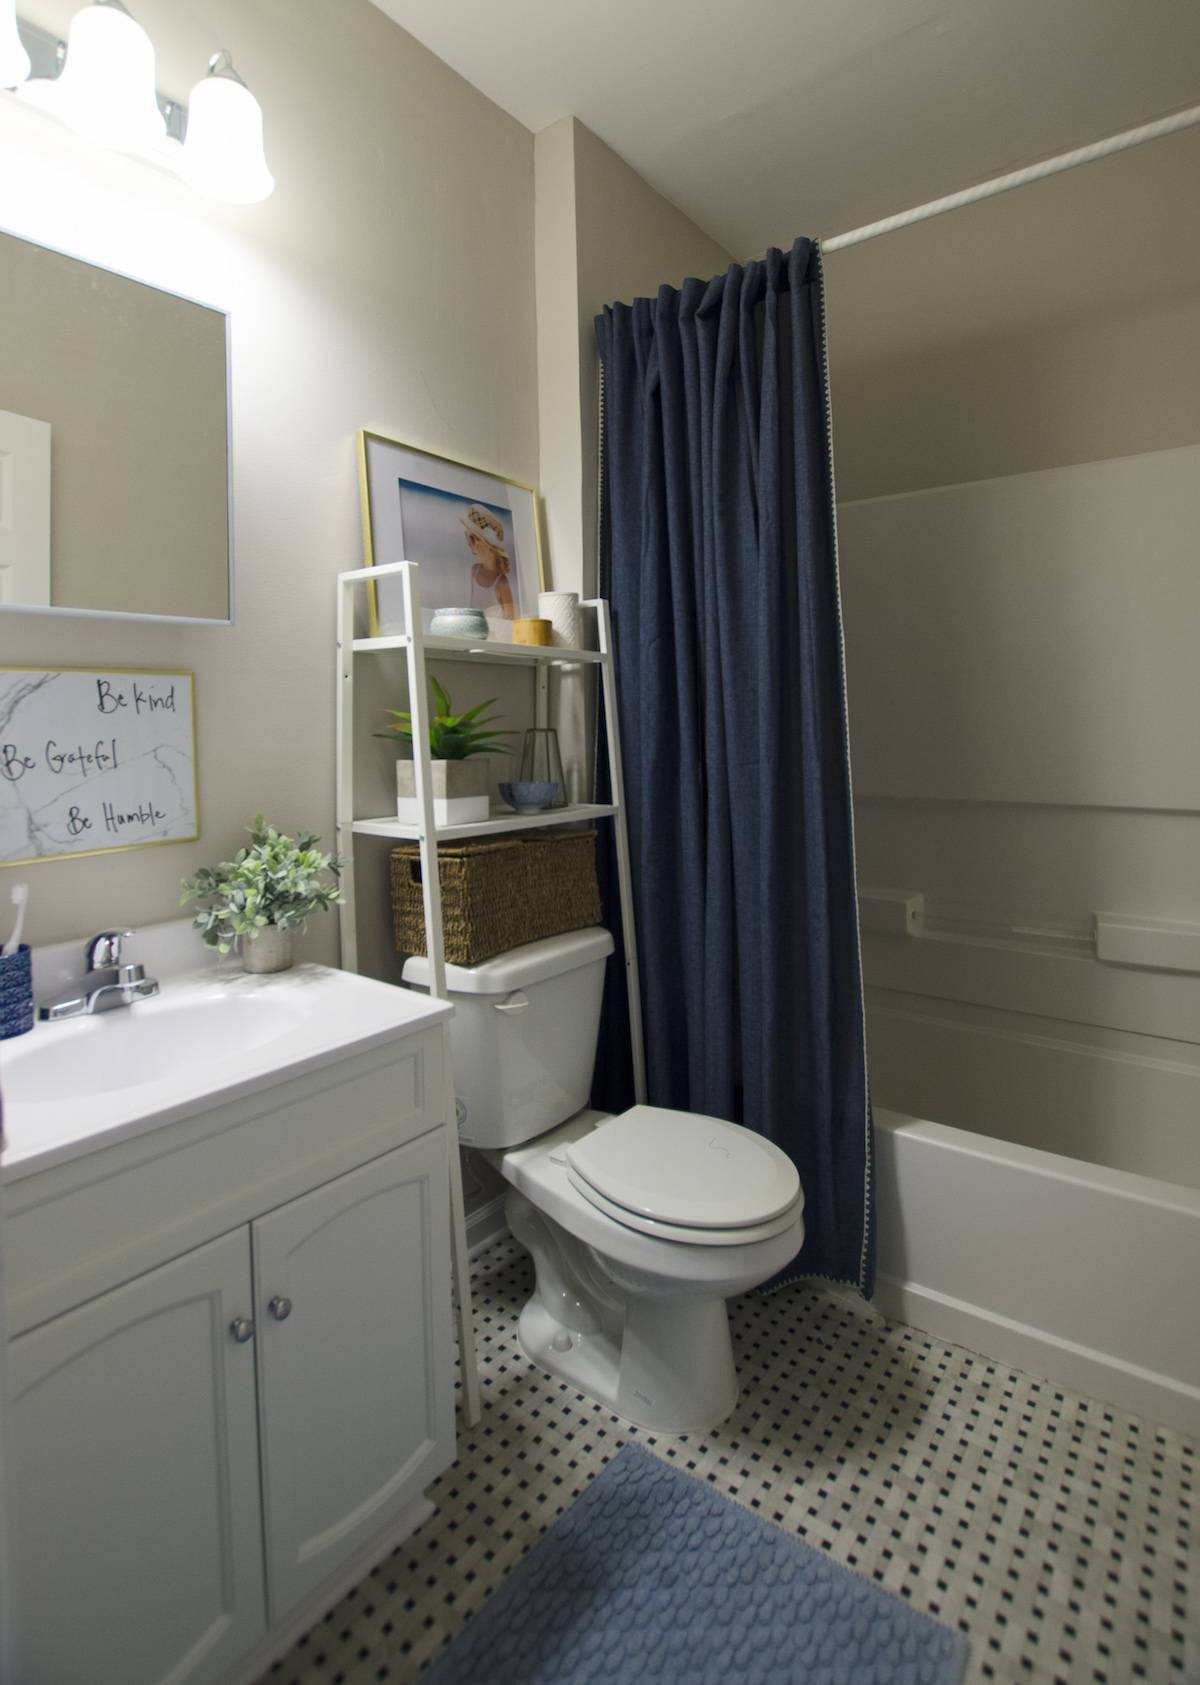 Tips for Styling a Plain Builder Grade Bathroom